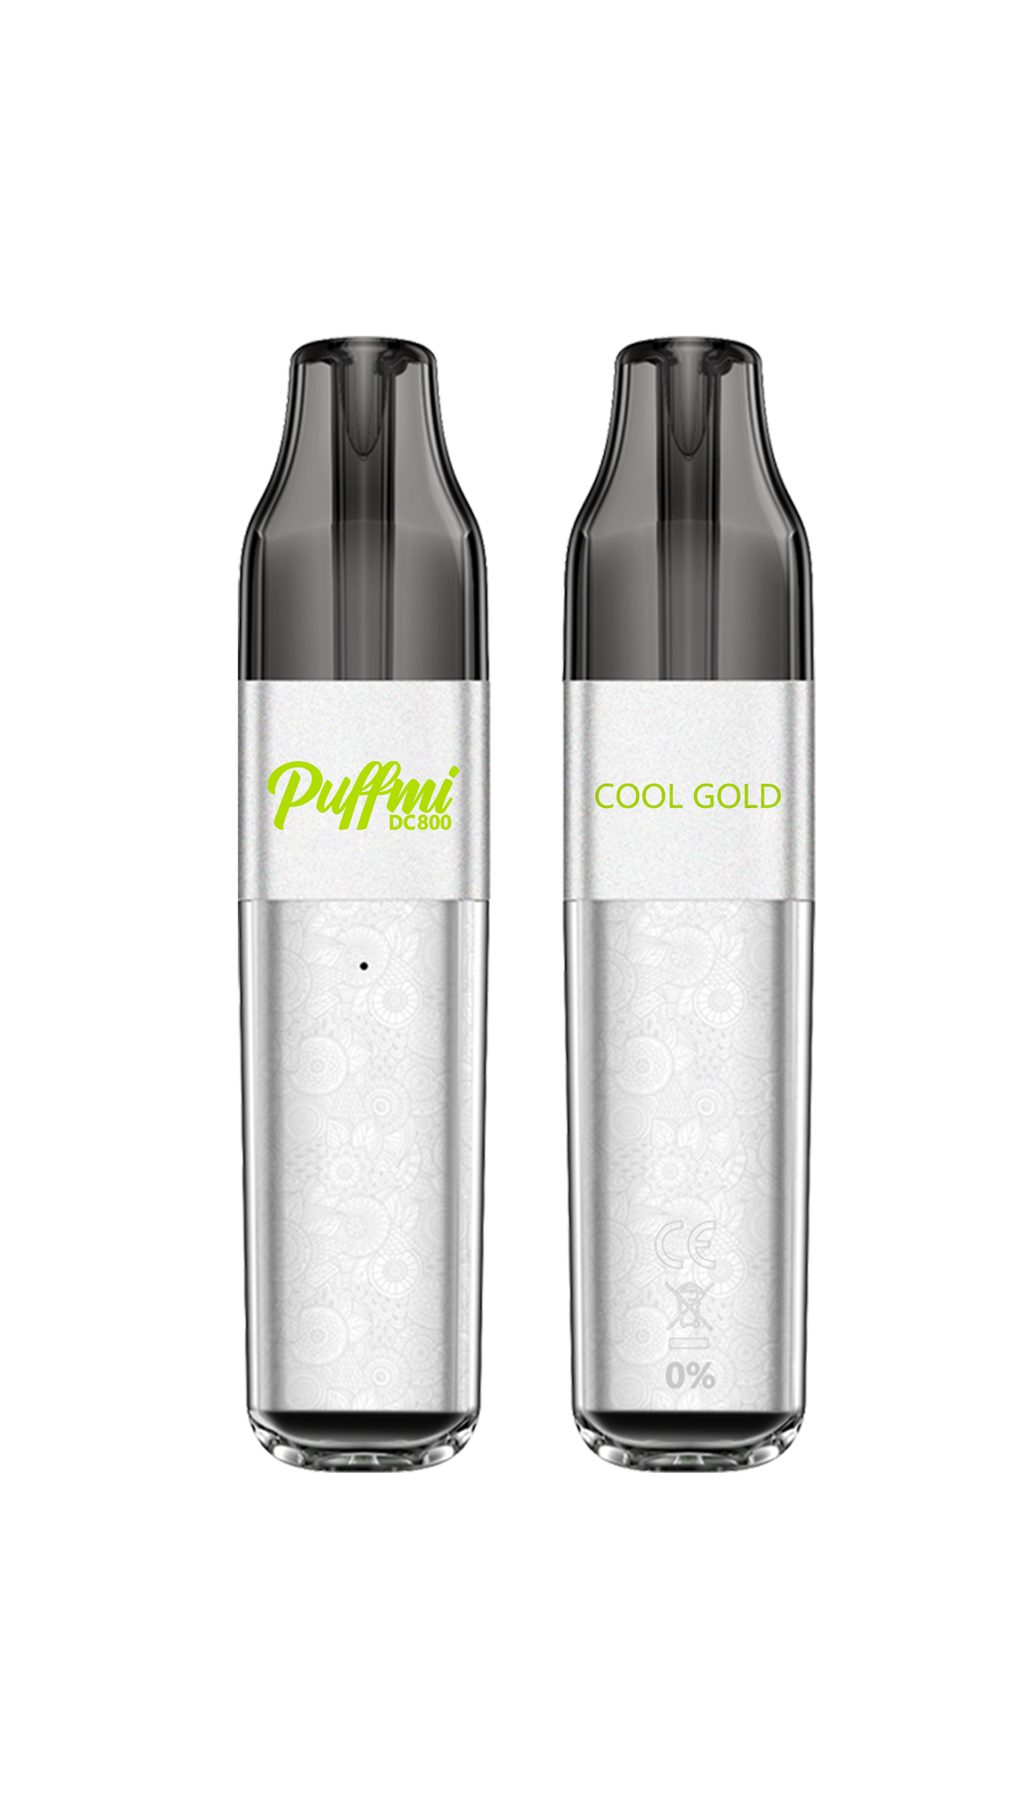 Puffmi DC800 Disposable Kit -  COOL GOLD  0mg Nicotine Disposable Vape